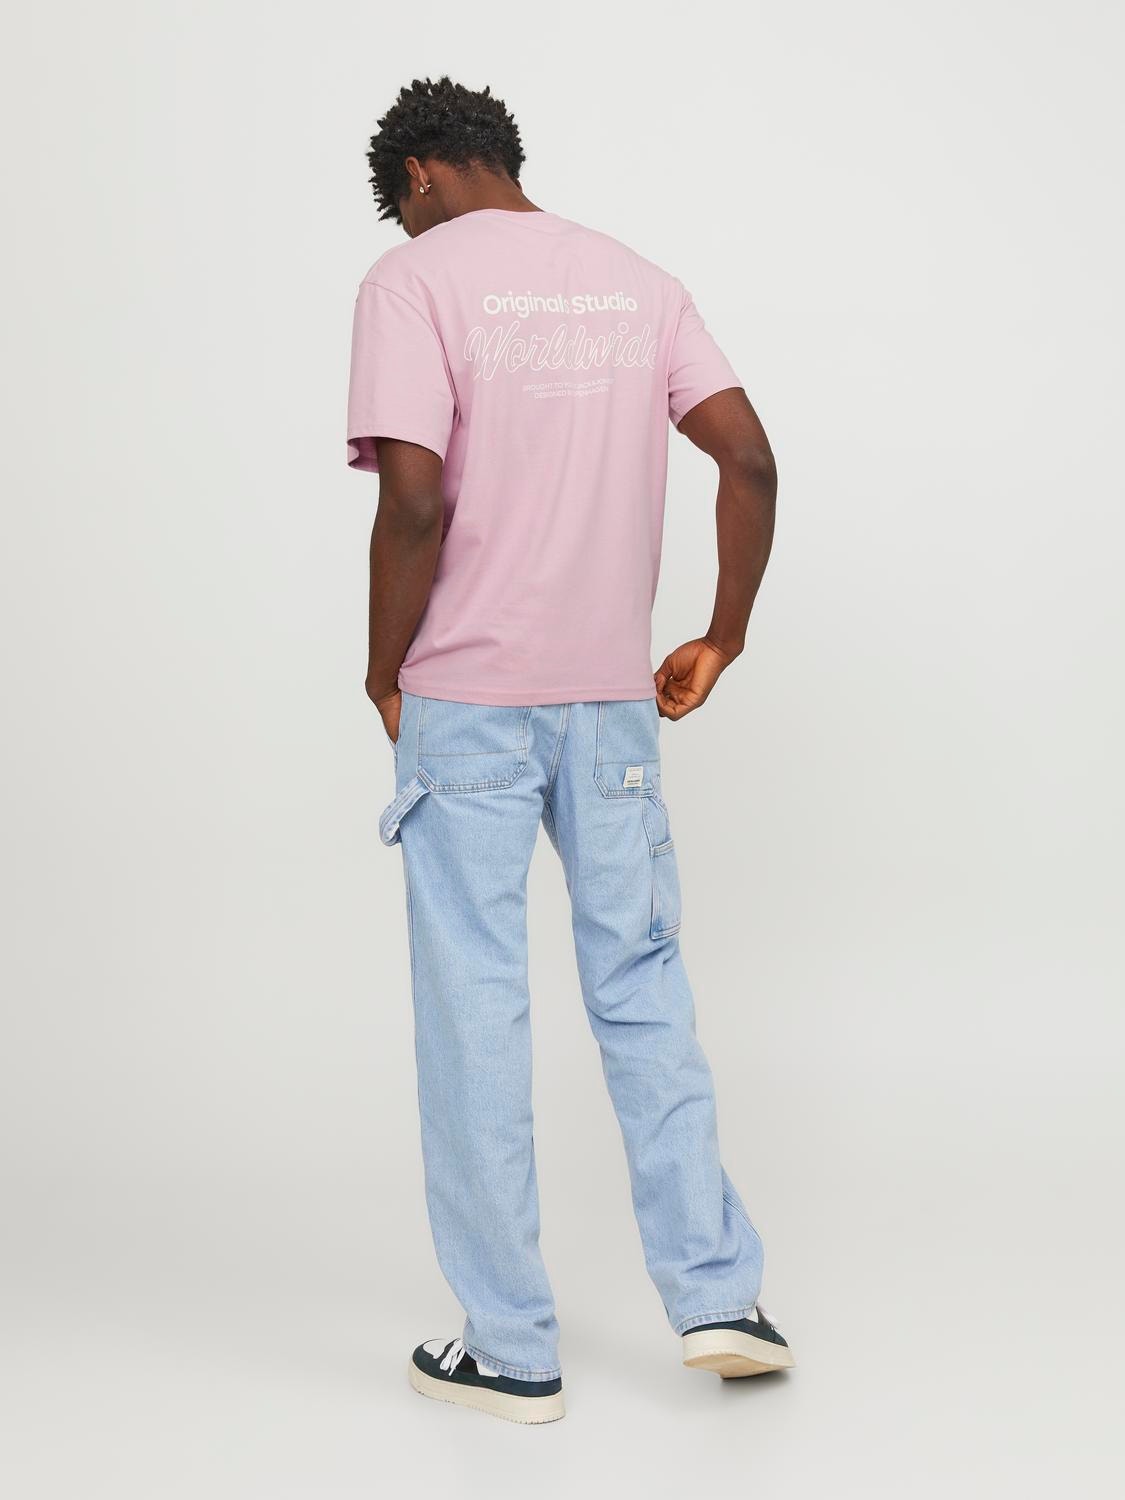 Jack & Jones Printed Crew neck T-shirt -Pink Nectar - 12240122